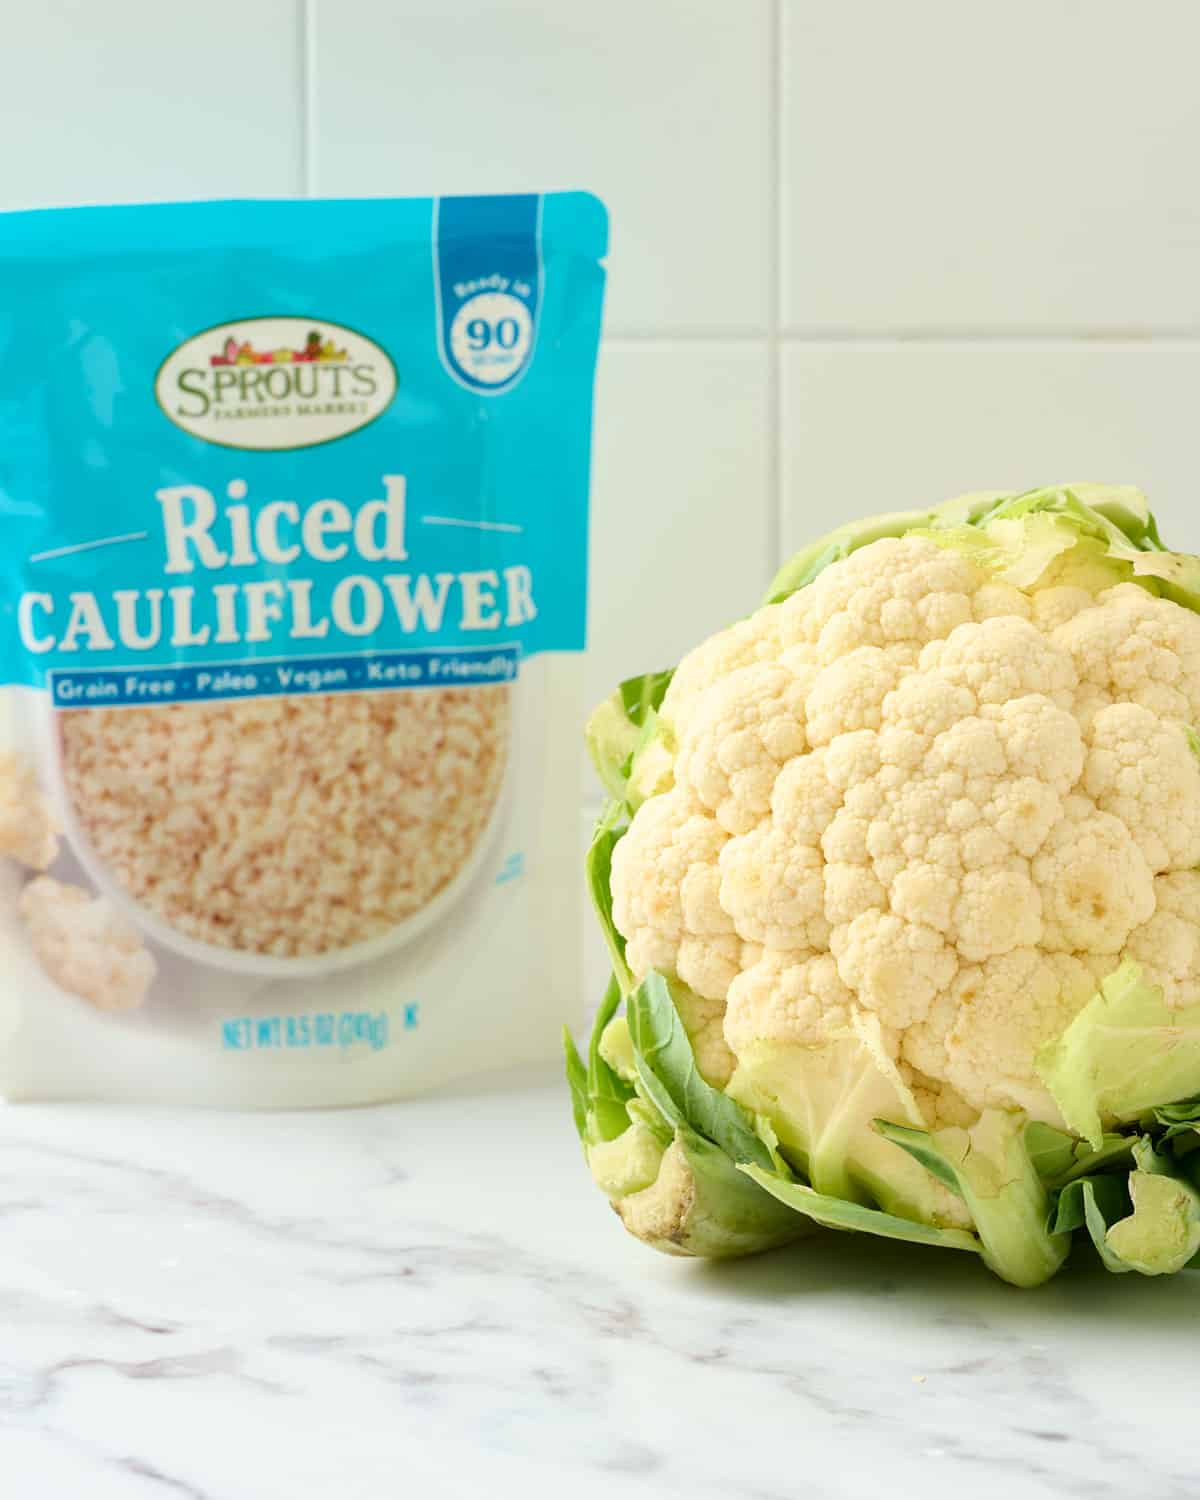 store bought riced cauliflower versus cauliflower head